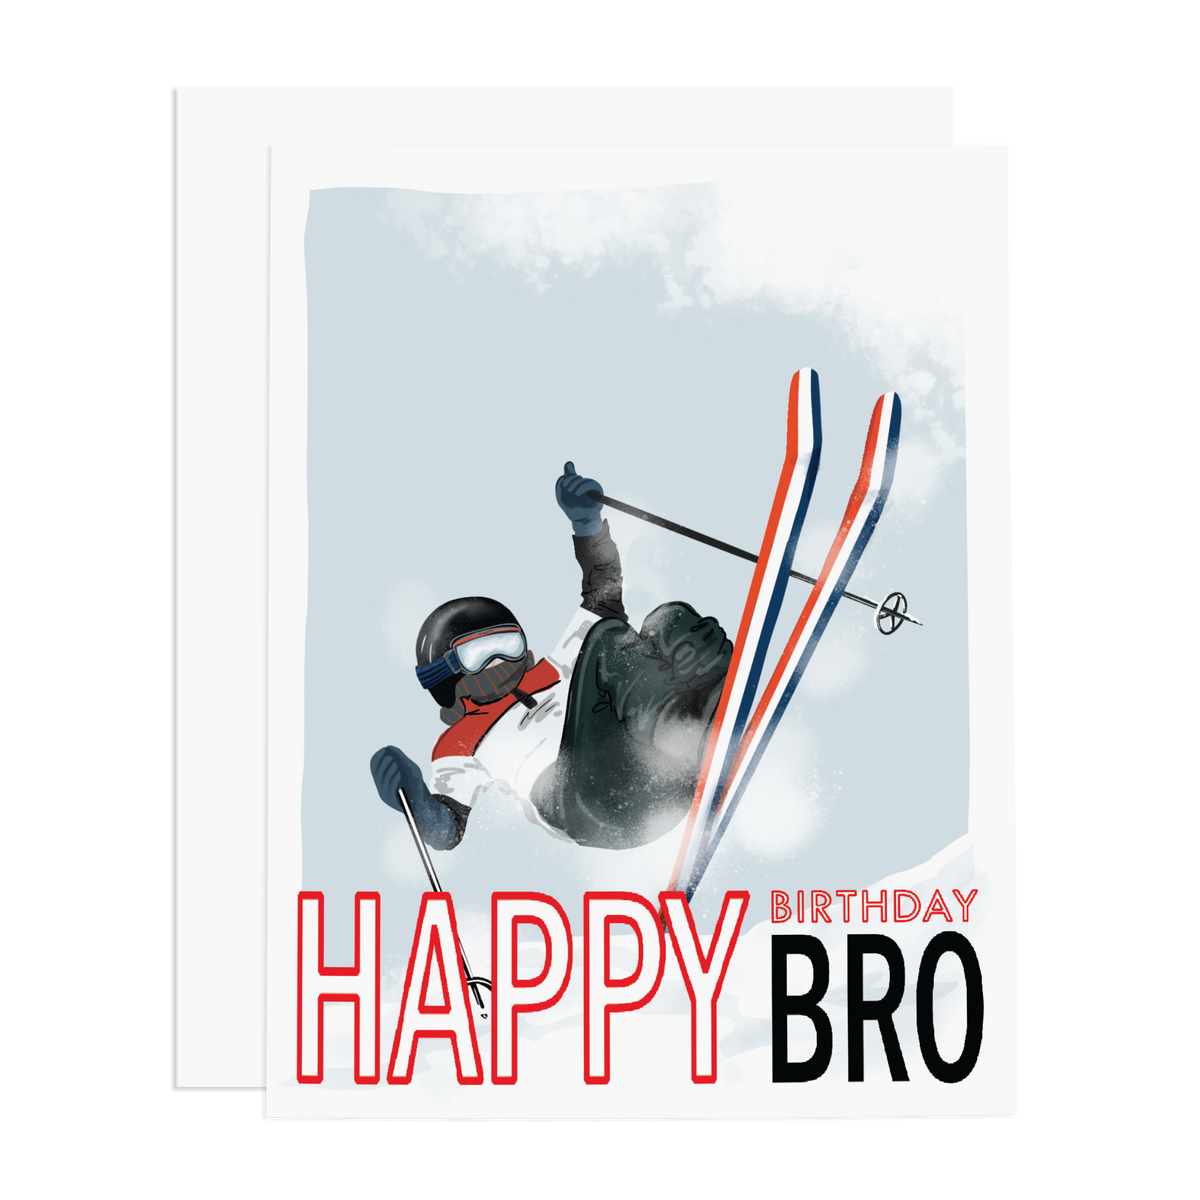 Bro Skier Birthday Card